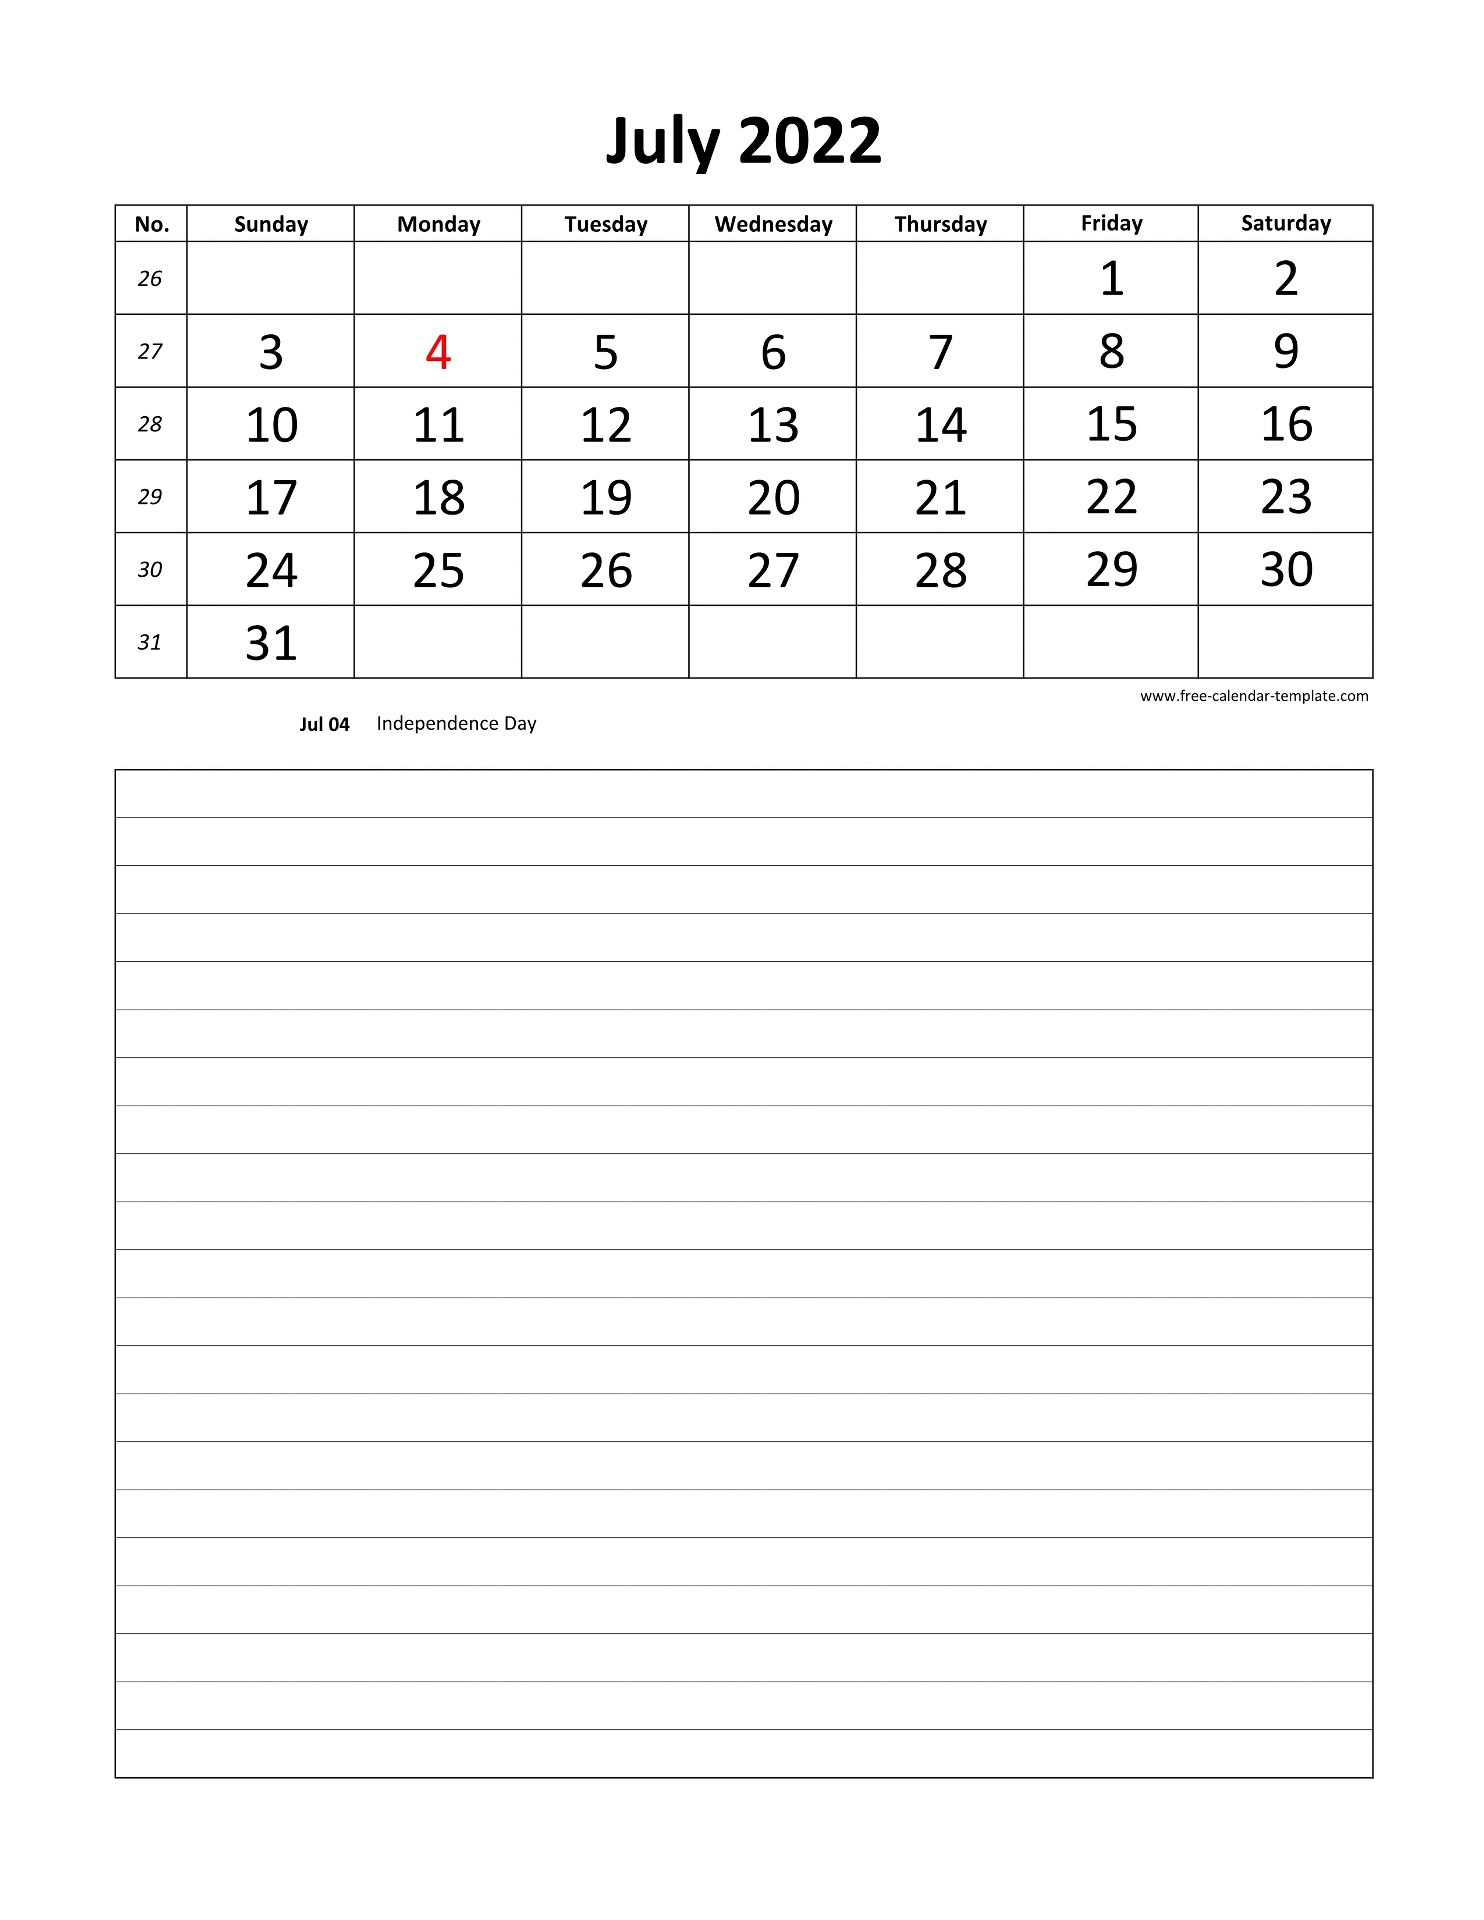 July 2022 Daily Calendar Printable - Printable Calendar